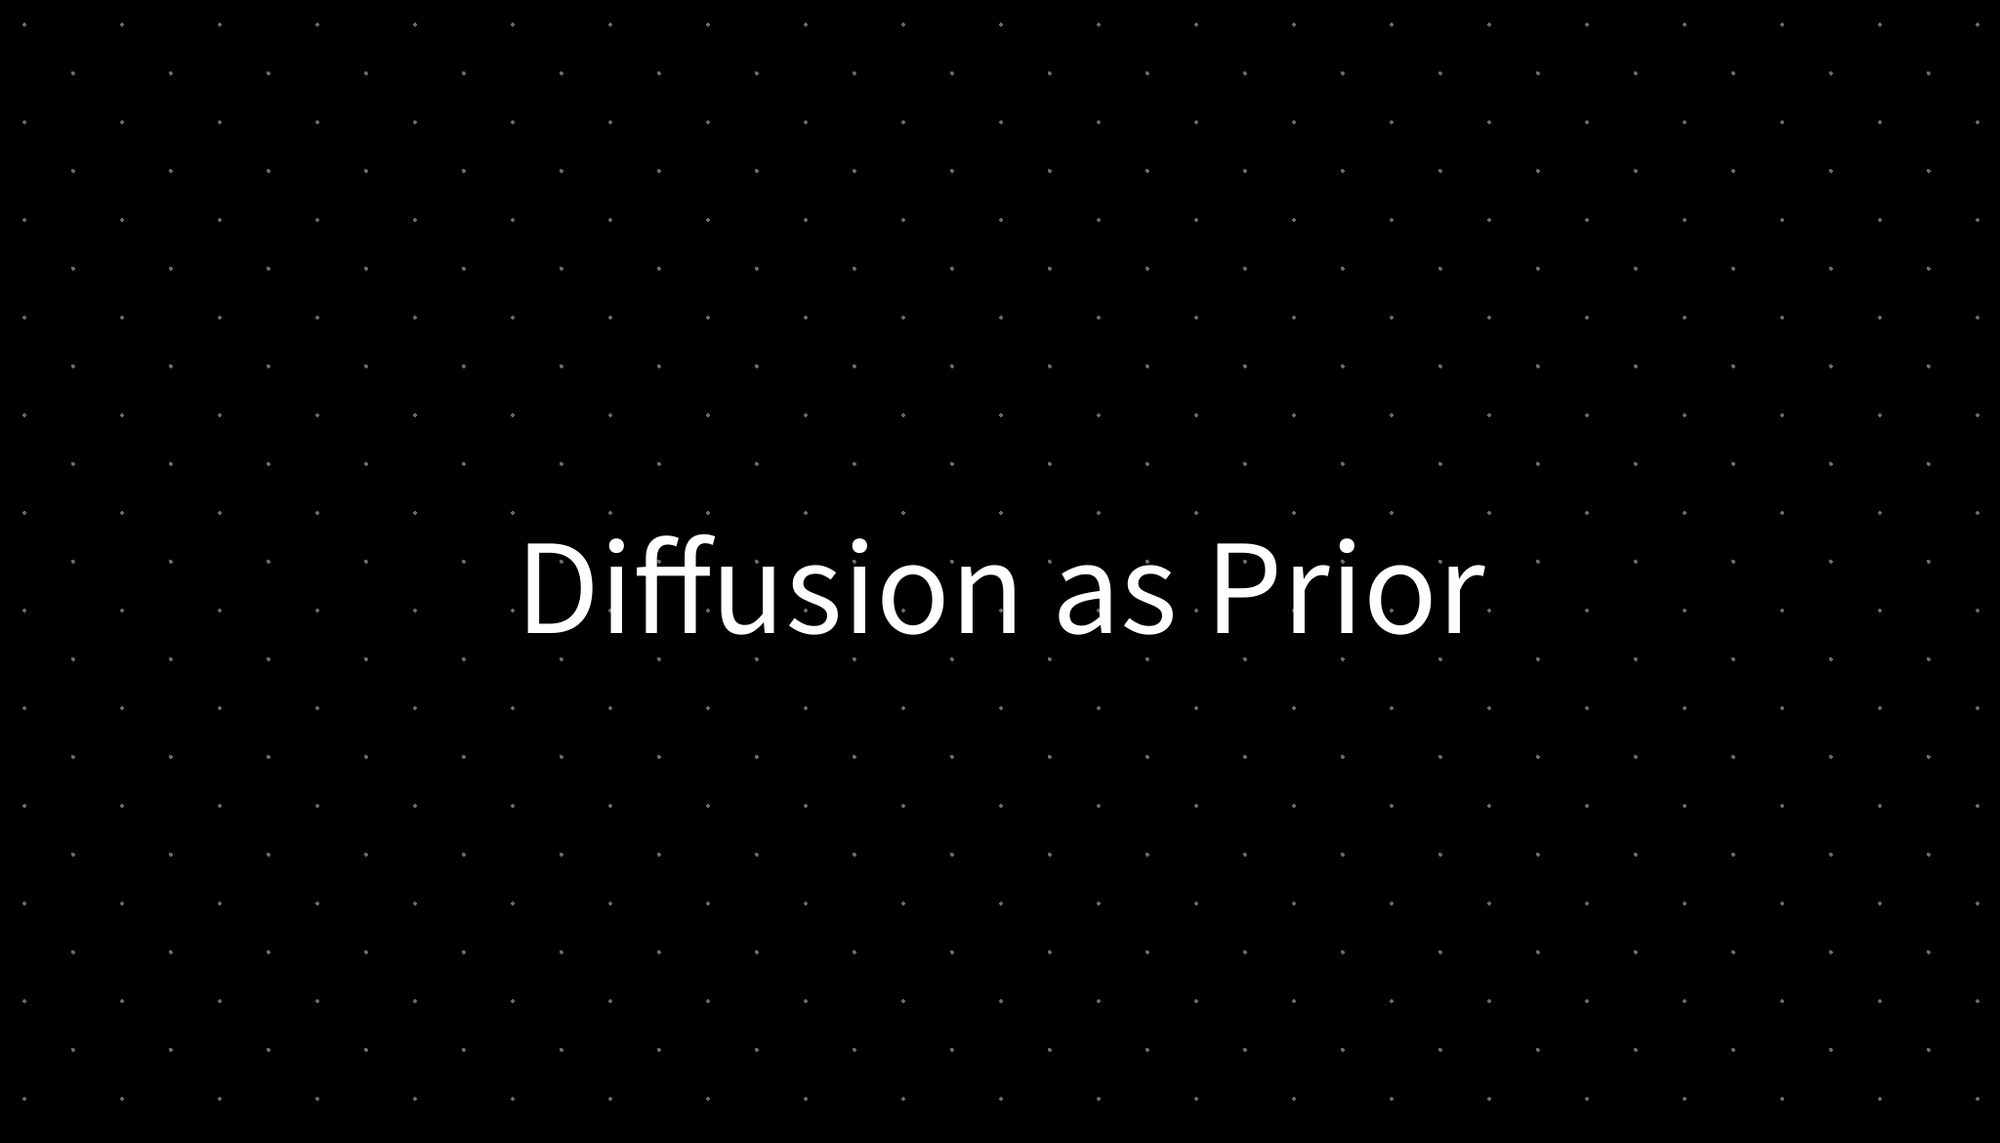 Diffusion as Prior